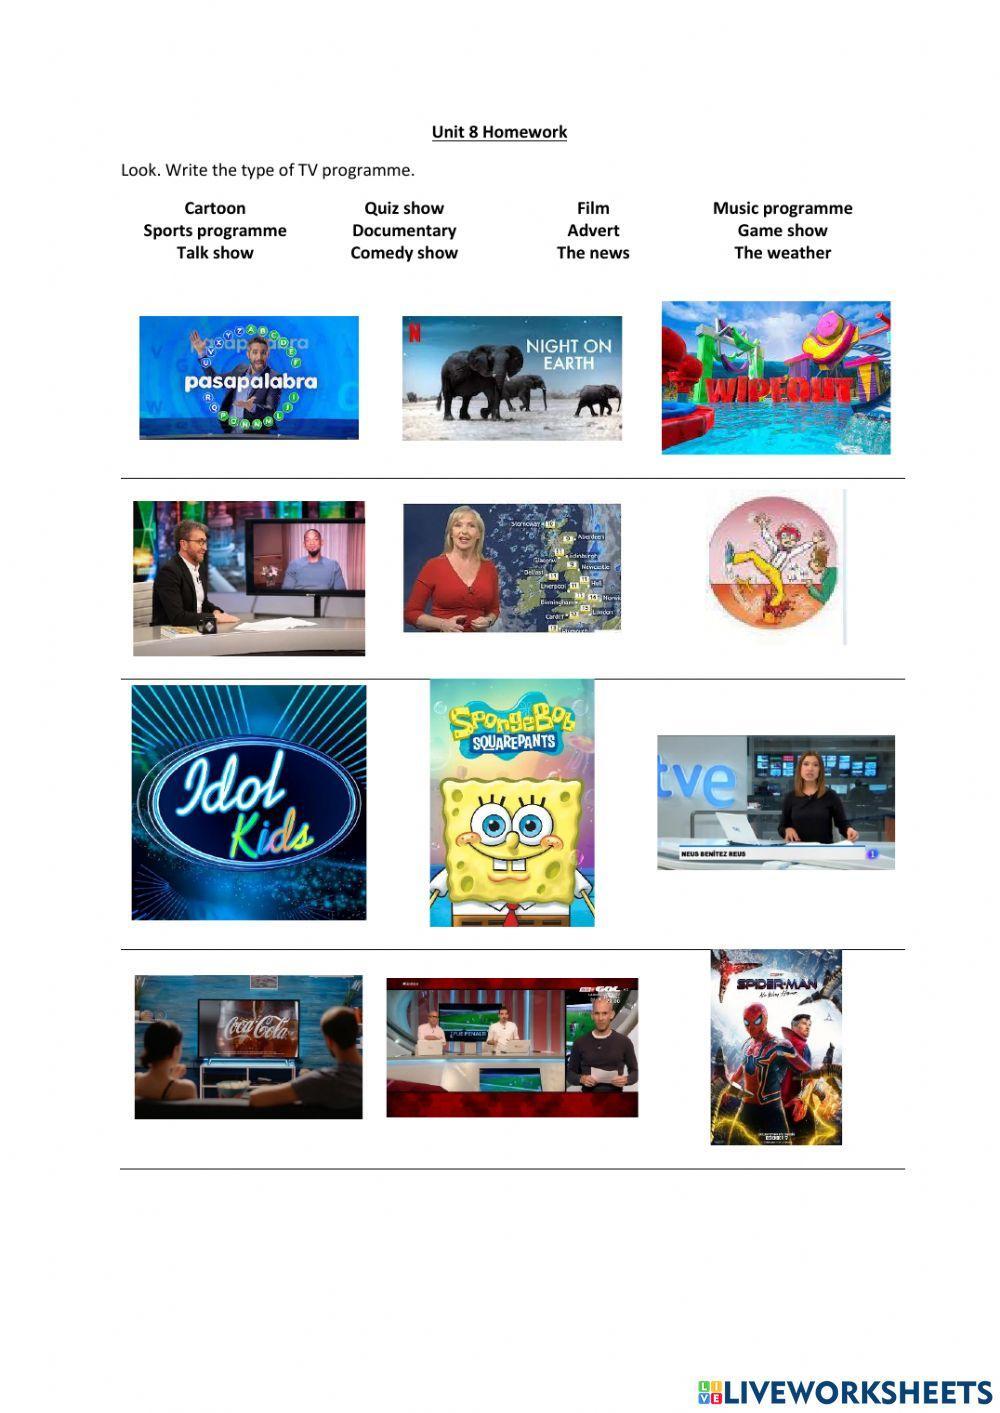 Types of TV programme